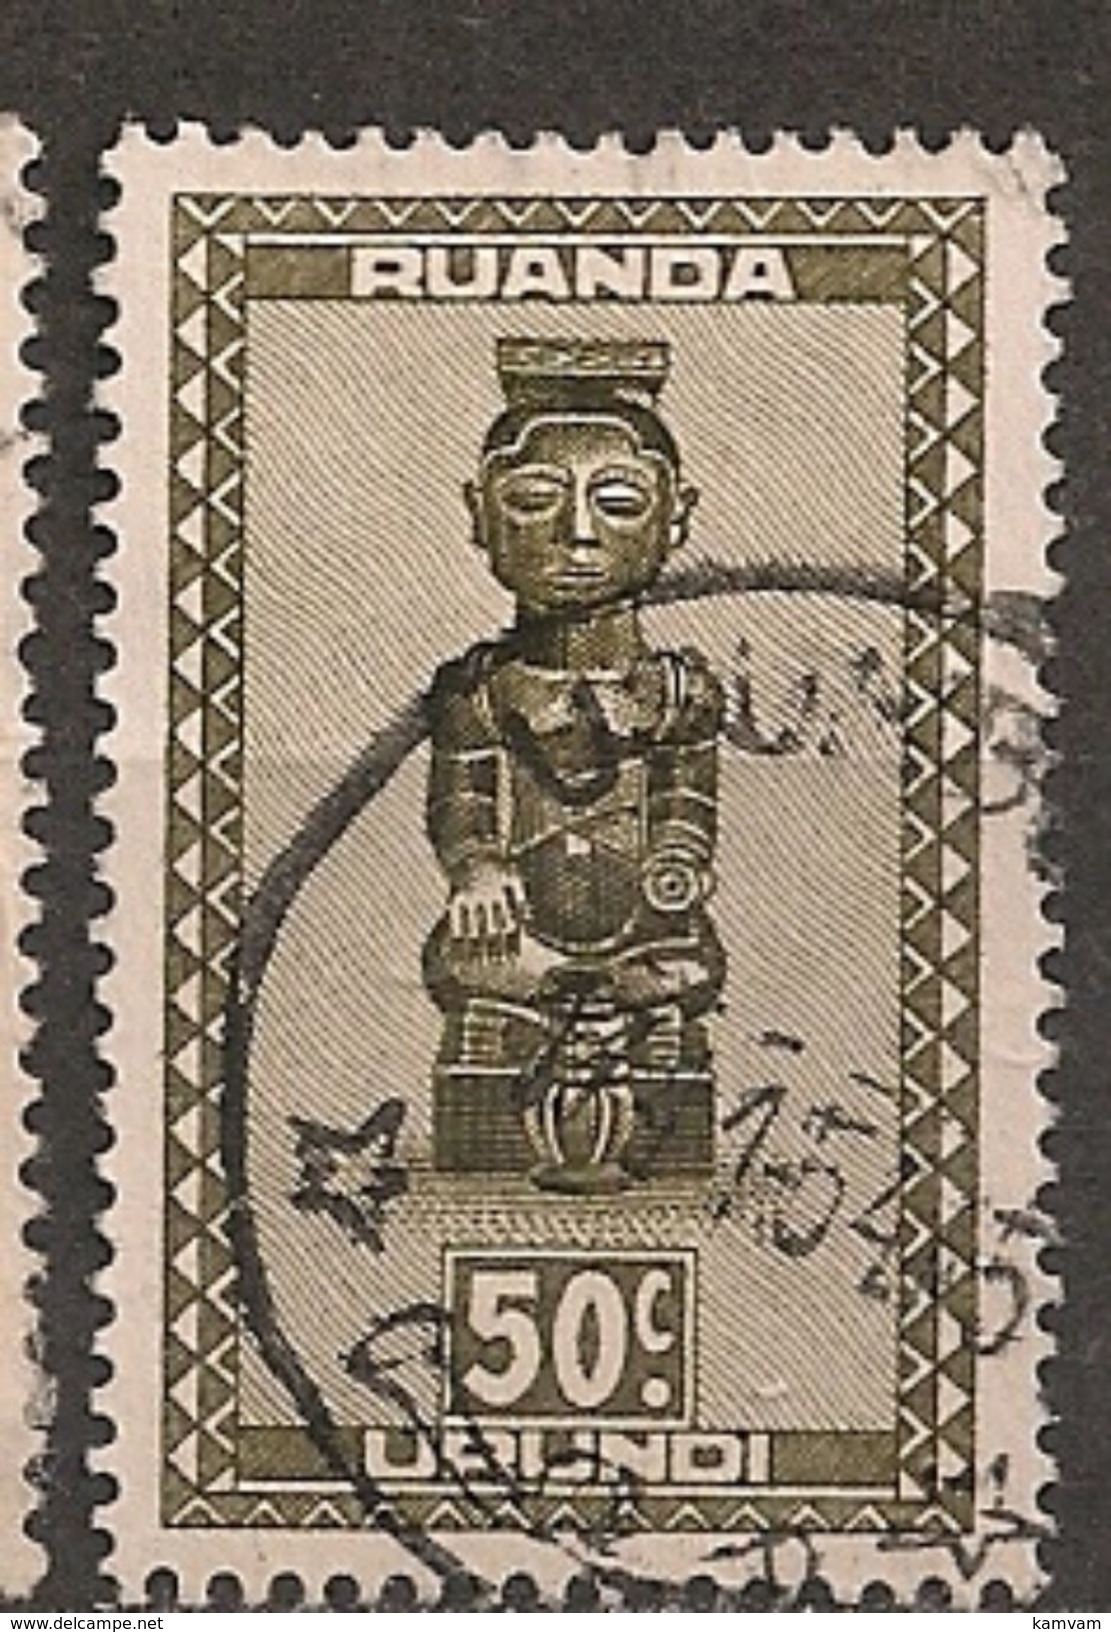 CONGO RUANDA URUNDI 159 USUMBURA - Usados